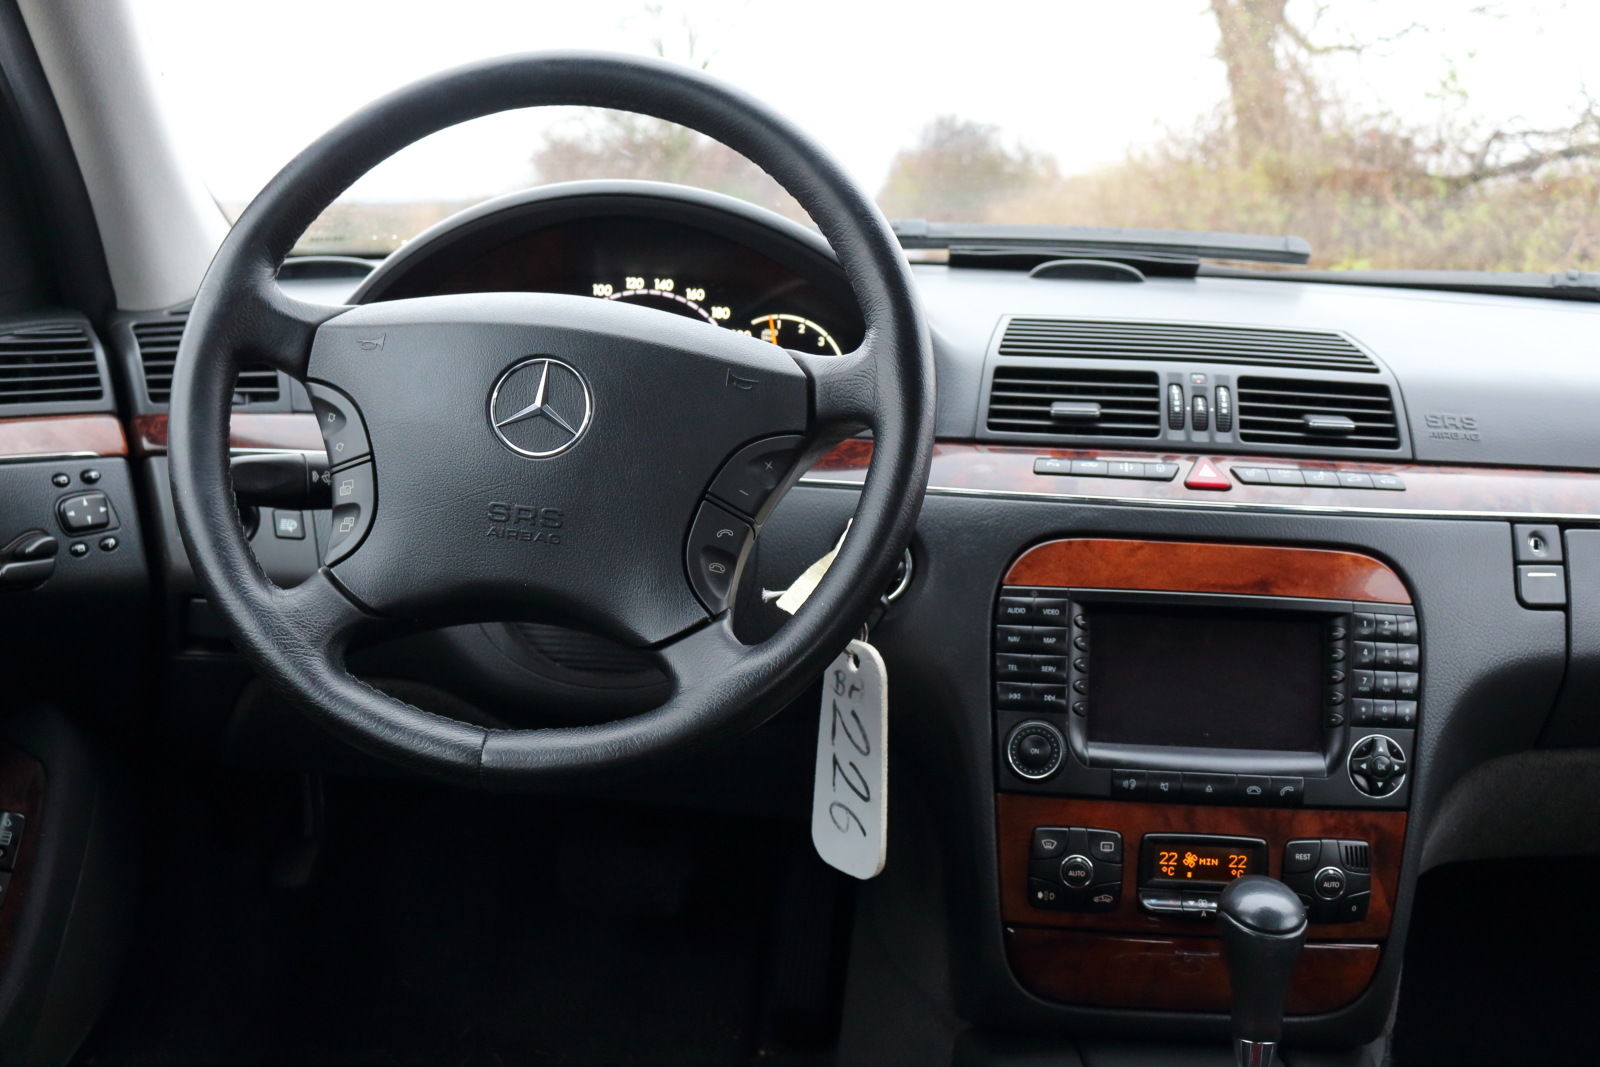 TopSpeed.sk test jazdenky Mercedes triedy S W220